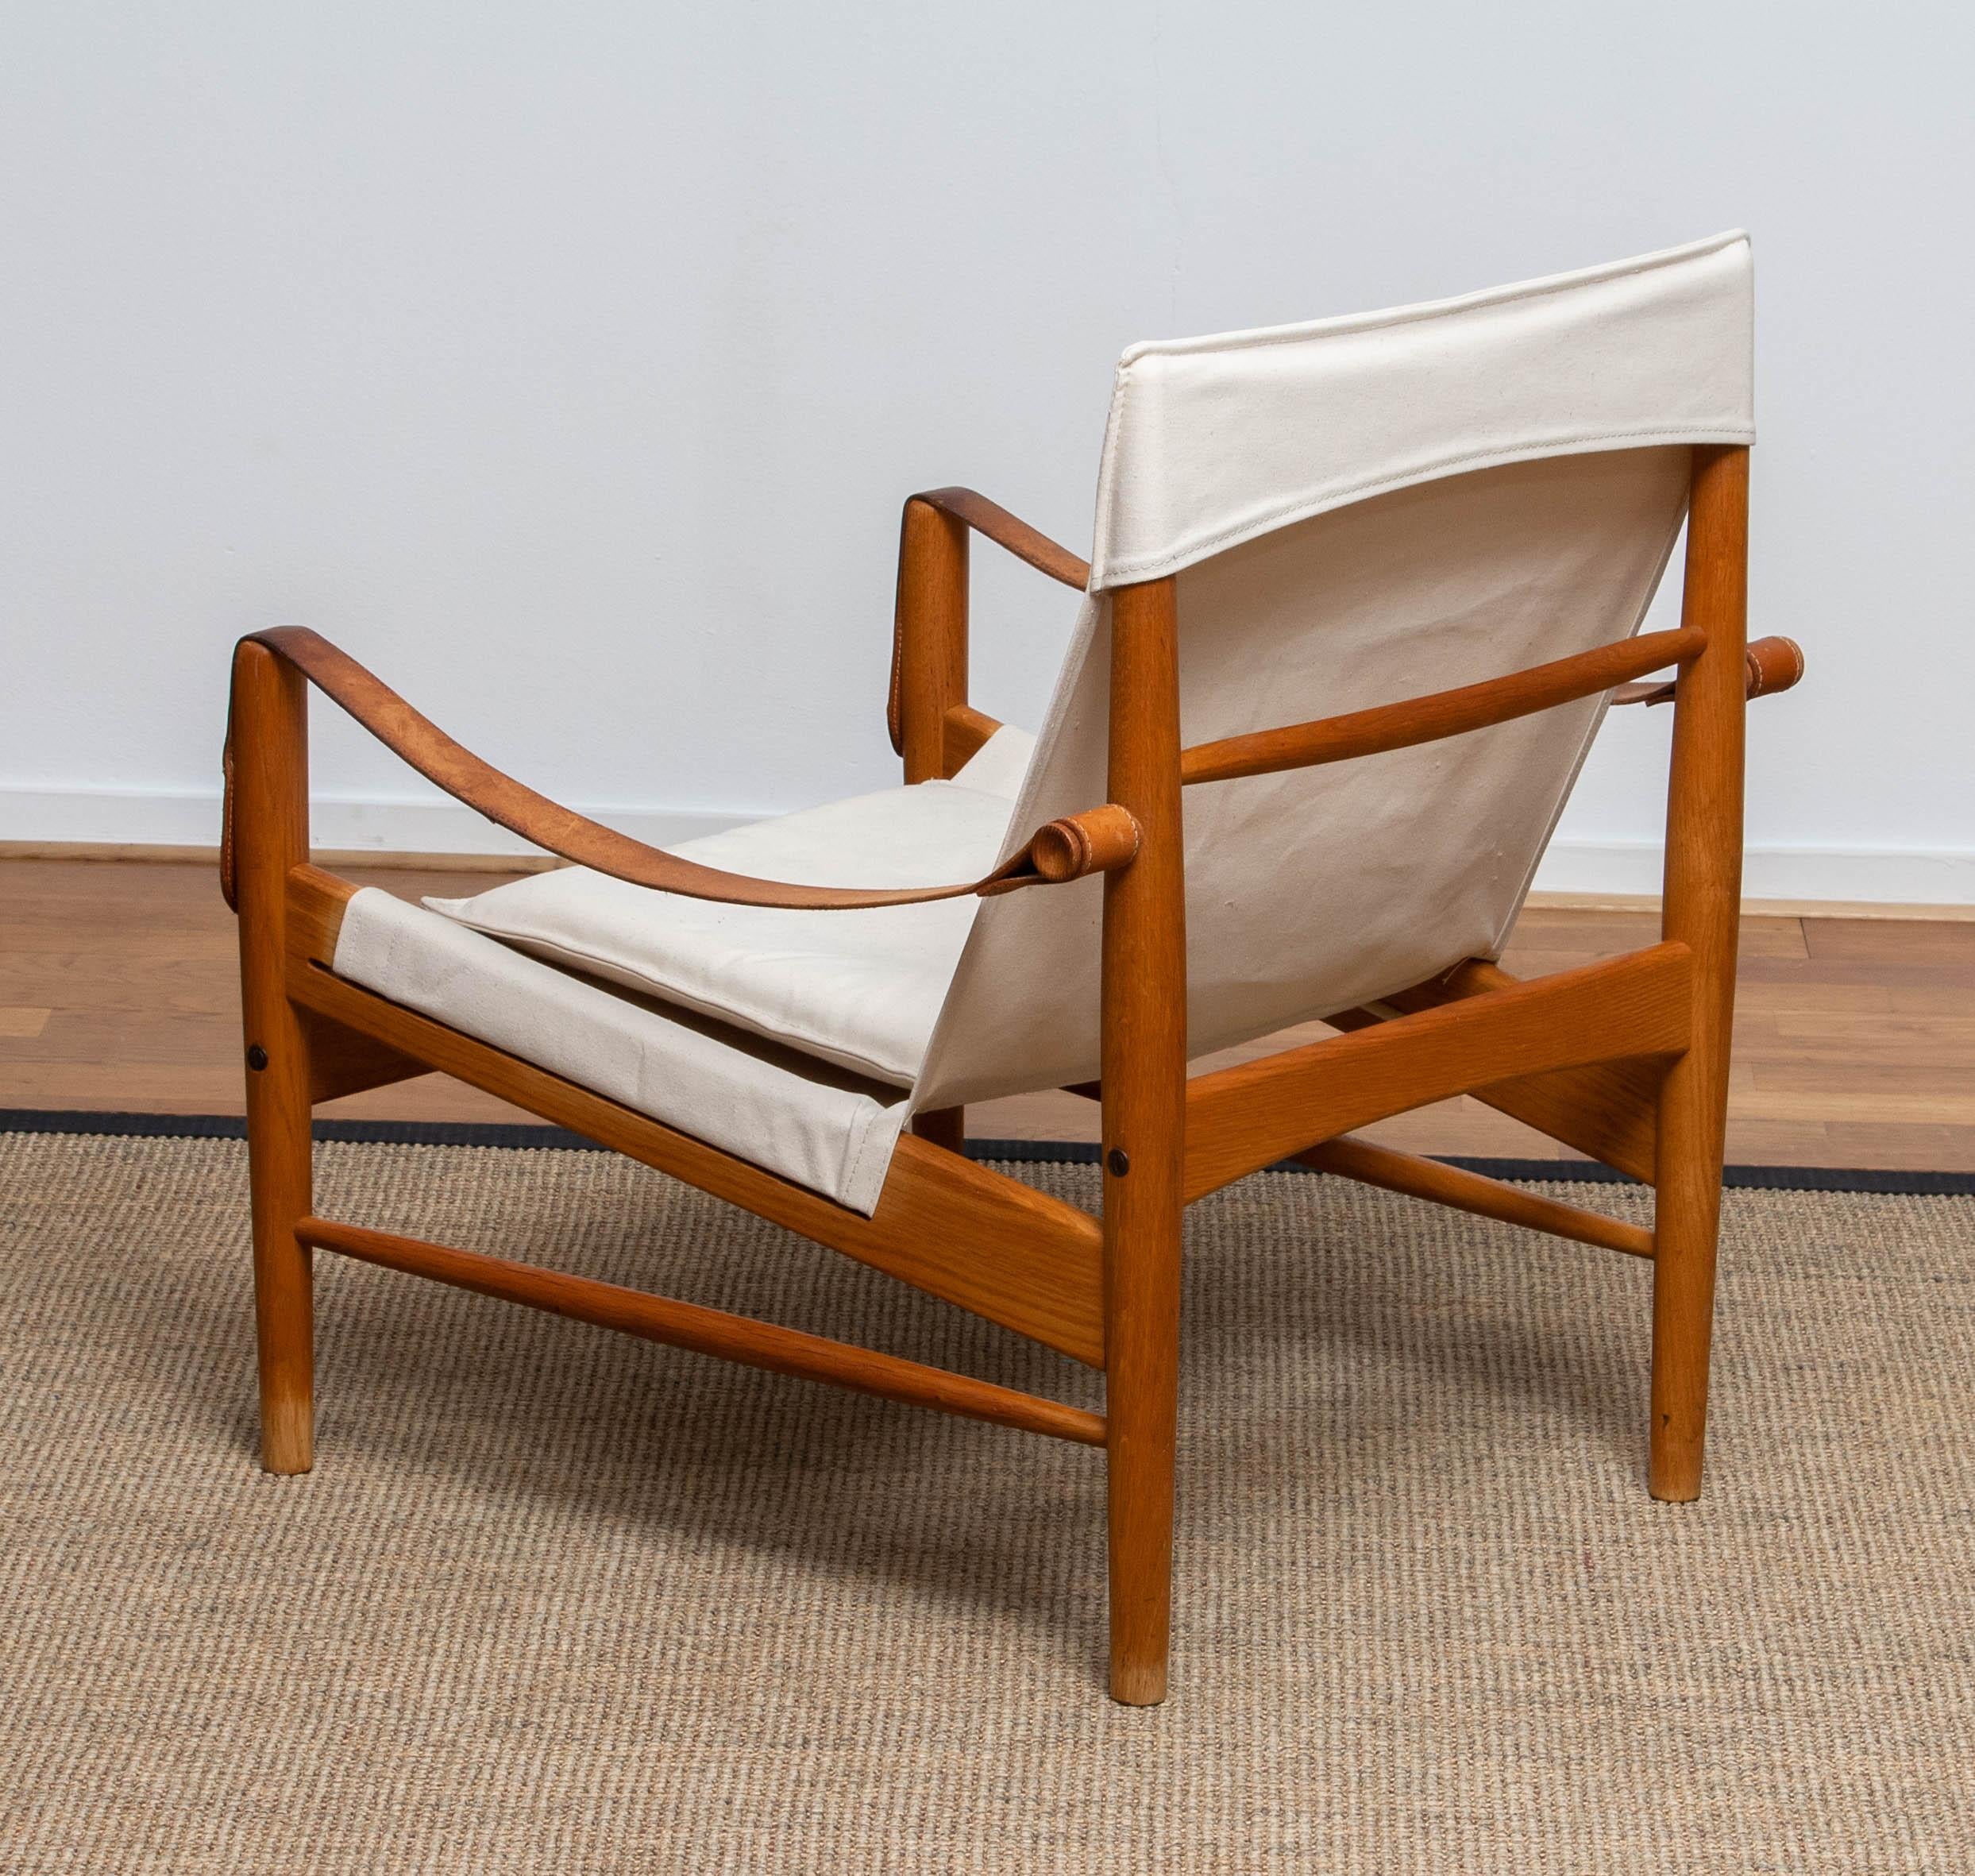 1960s, Safari Lounge Chair by Hans Olsen for Viska Möbler in Kinna, Sweden 1960s In Good Condition In Silvolde, Gelderland